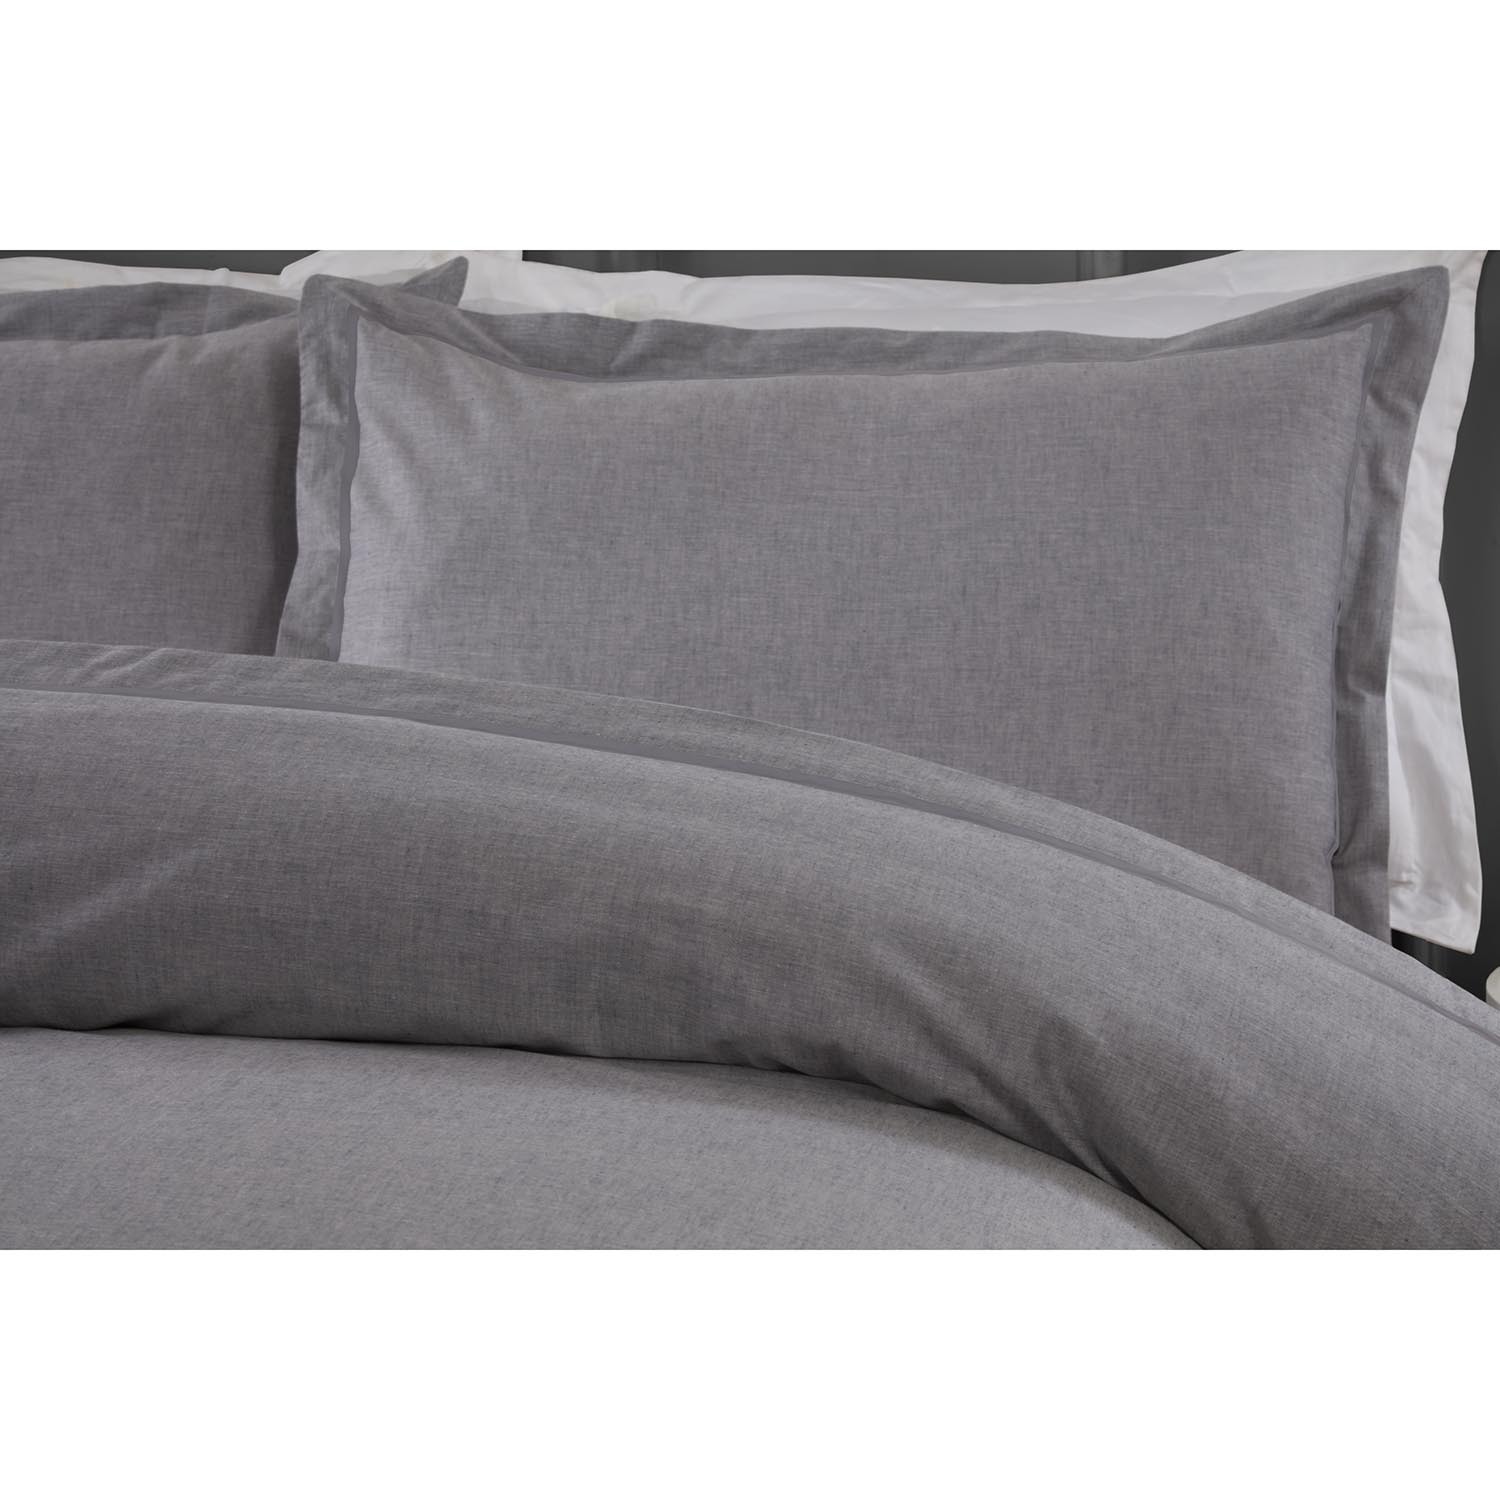 Josephine Oxford Edge Duvet Cover and Pillowcase Set - Super King size Image 3